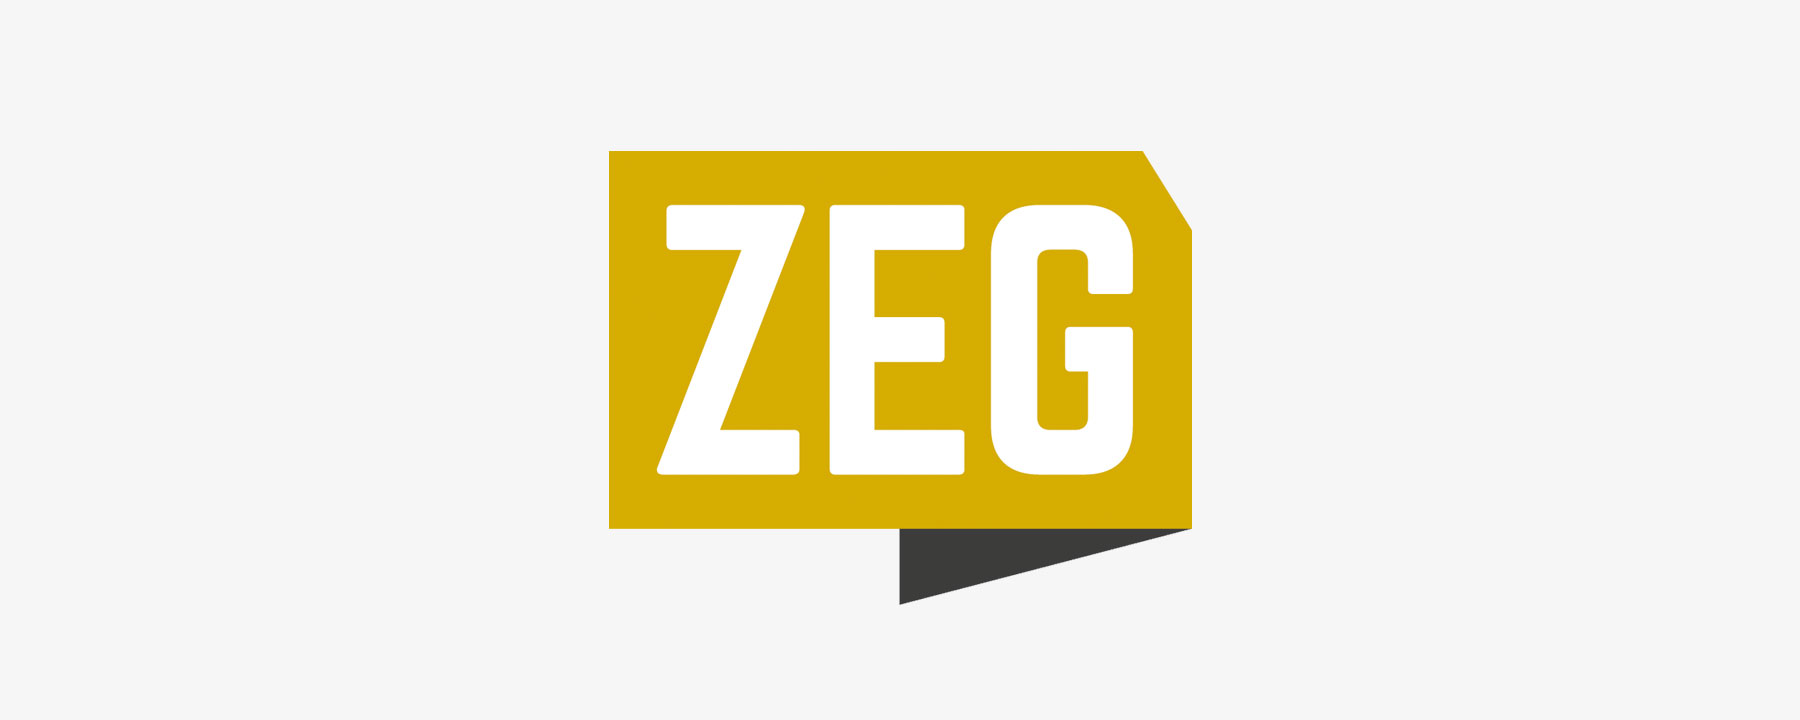 ZEG Achterhoek logo